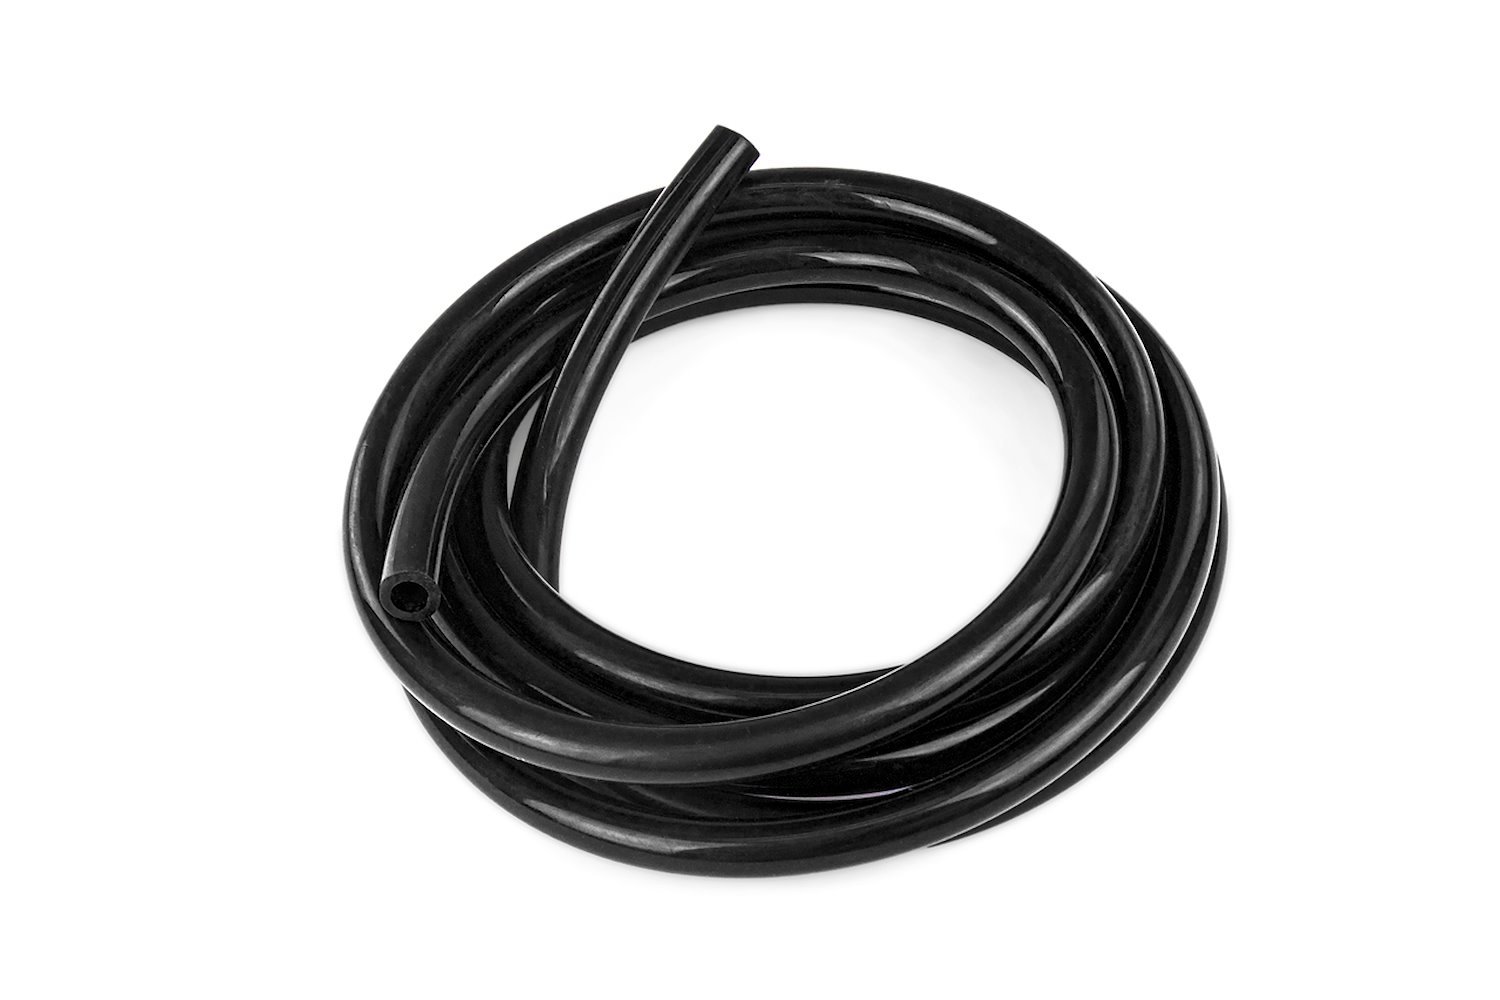 HTSVH95-BLKx5 High-Temperature Silicone Vacuum Hose Tubing, 3/8 in. ID, 5 ft. Roll, Black